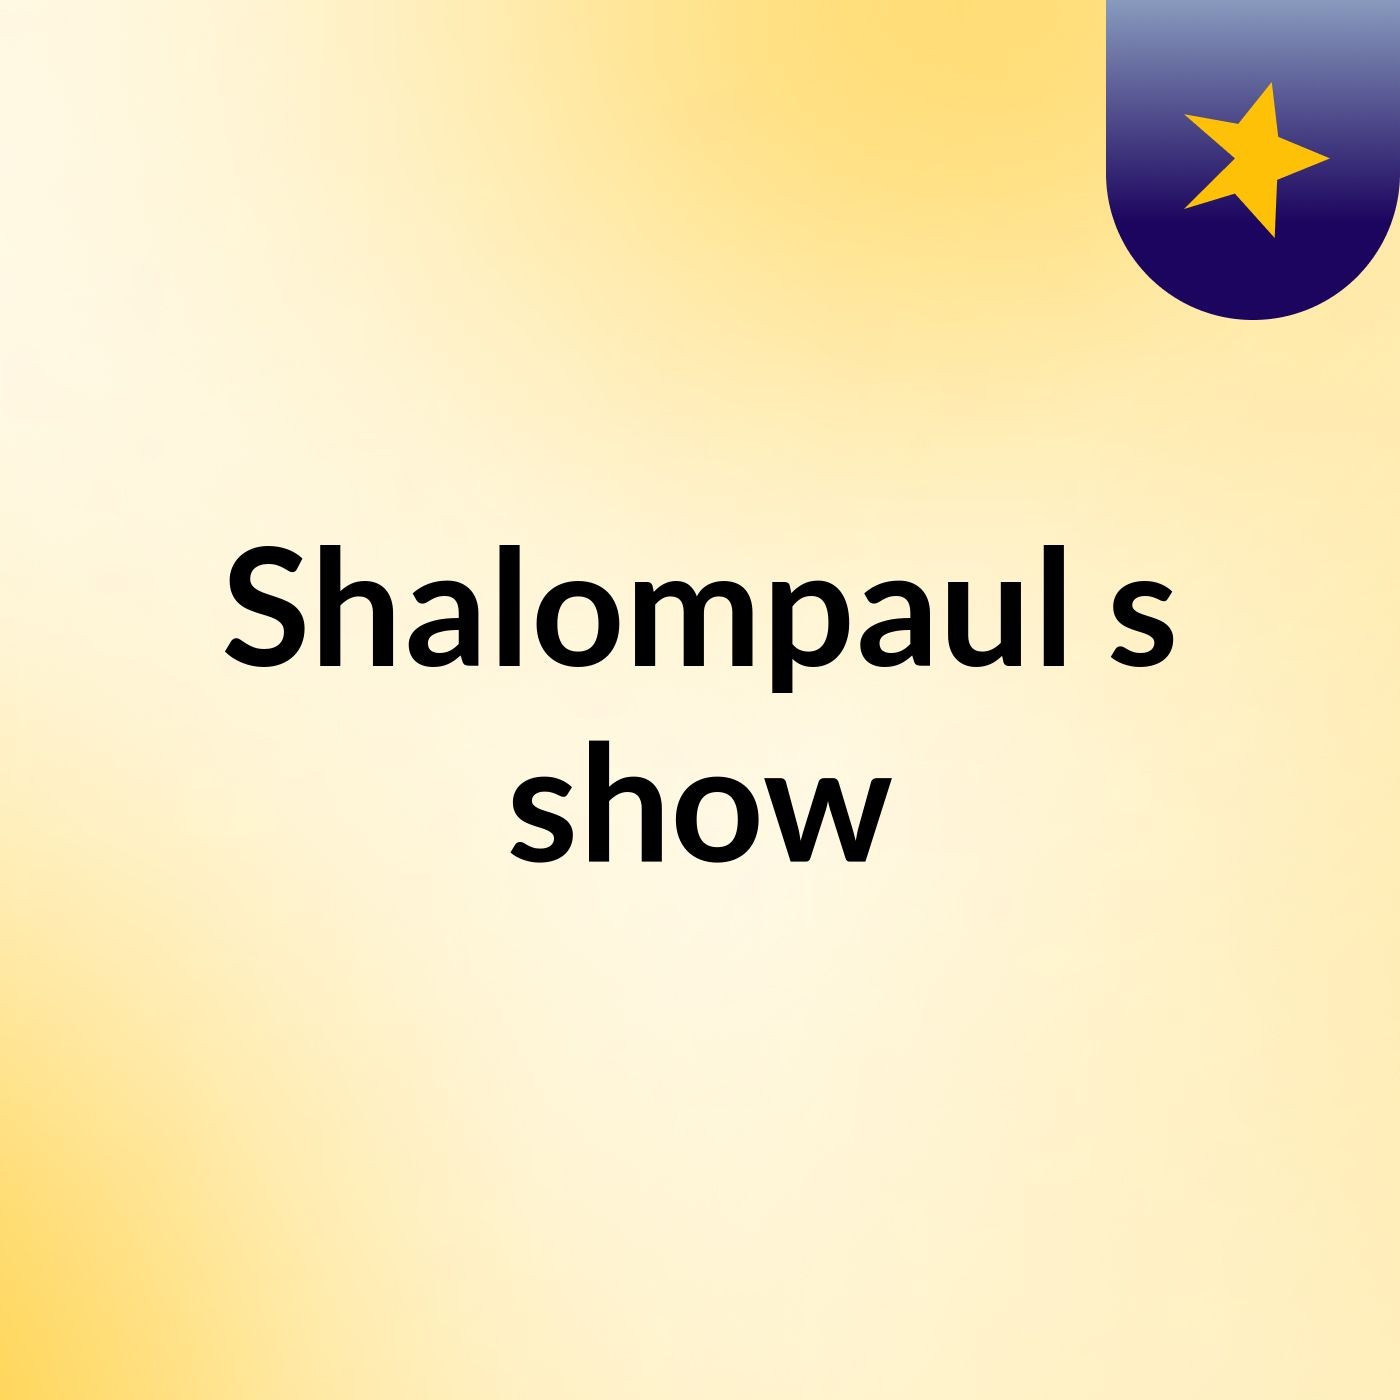 Shalompaul's show